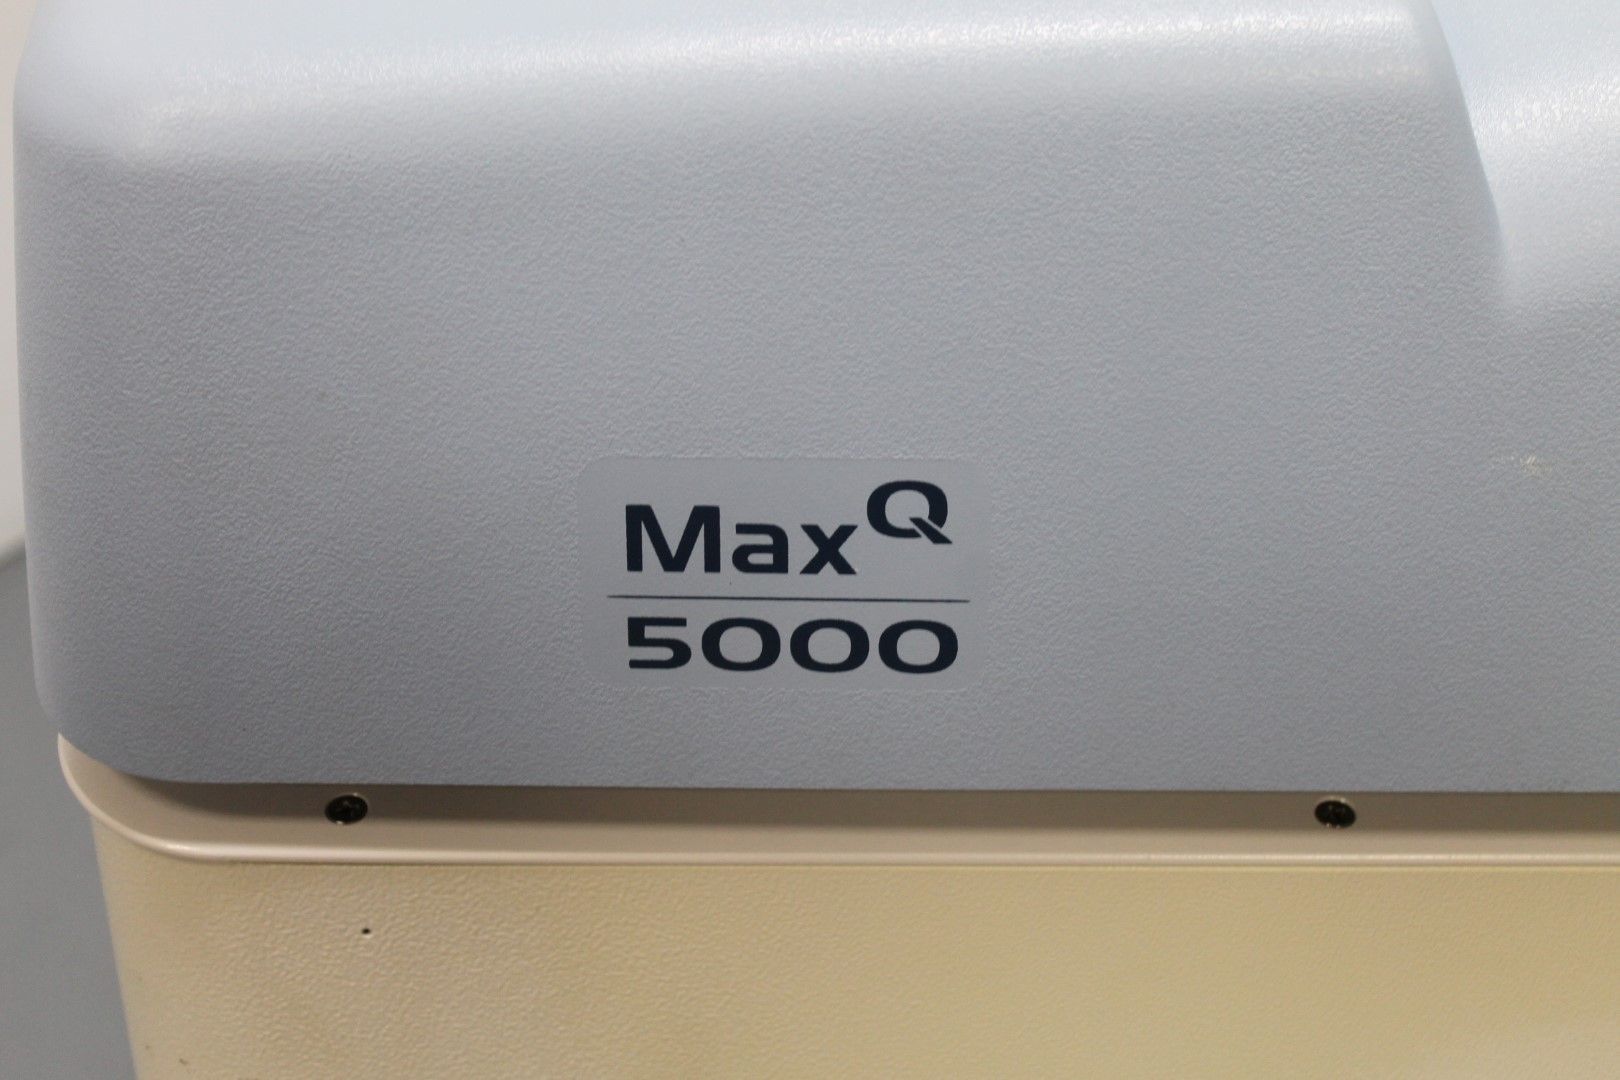 Barnstead Maxq 5000 Manual Treadmill